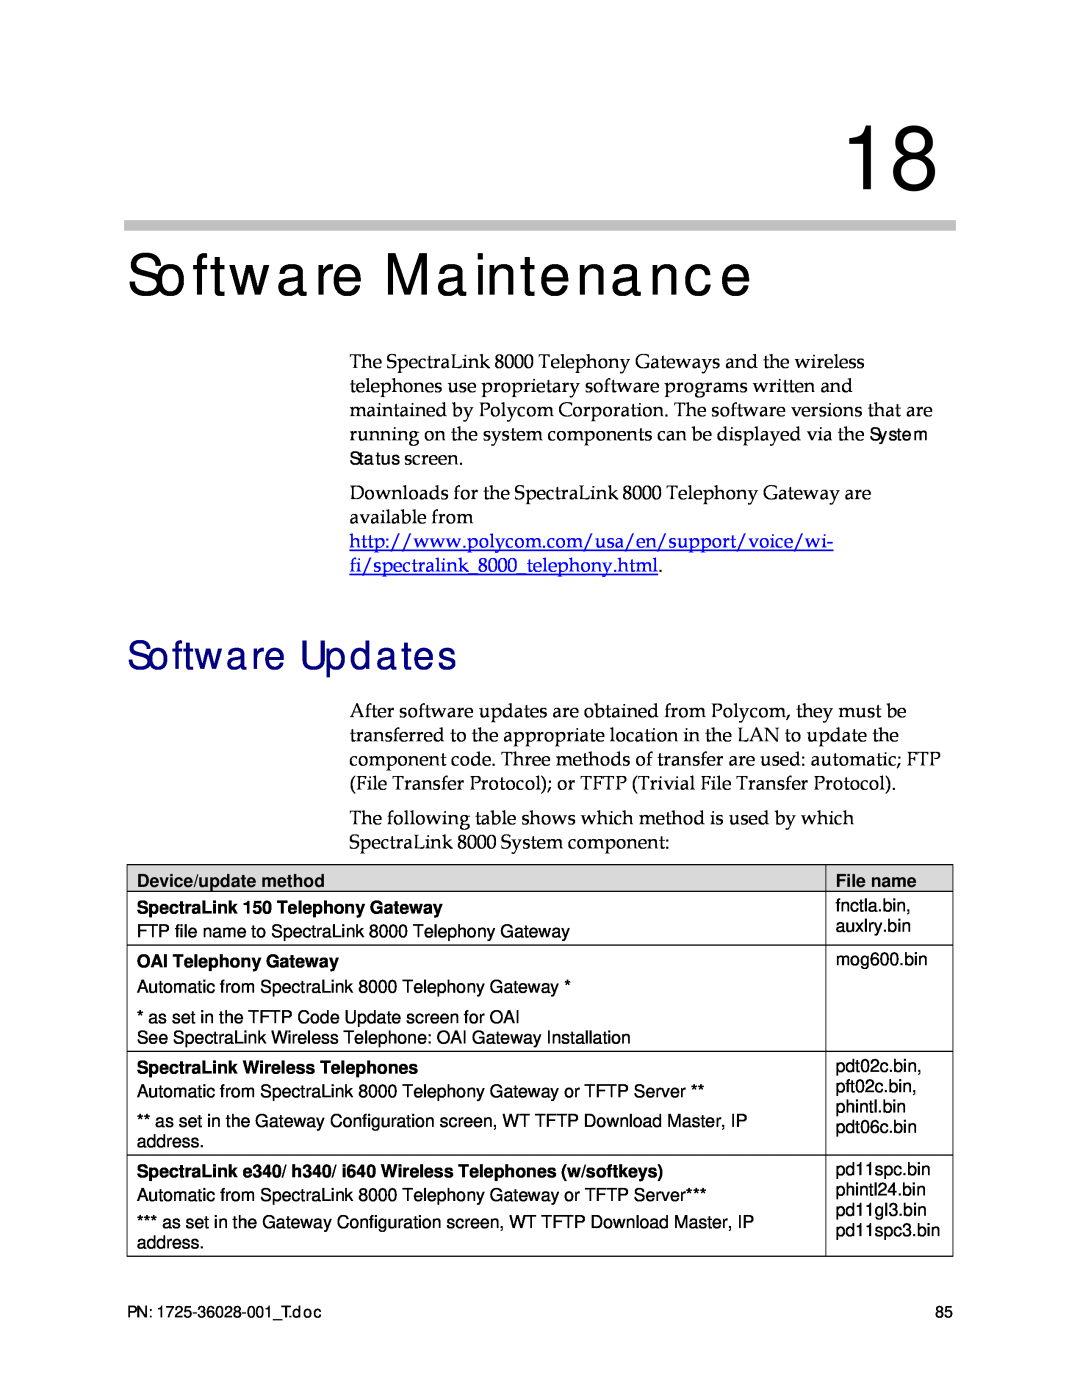 Polycom 1725-36028-001 manual Software Maintenance, Software Updates 